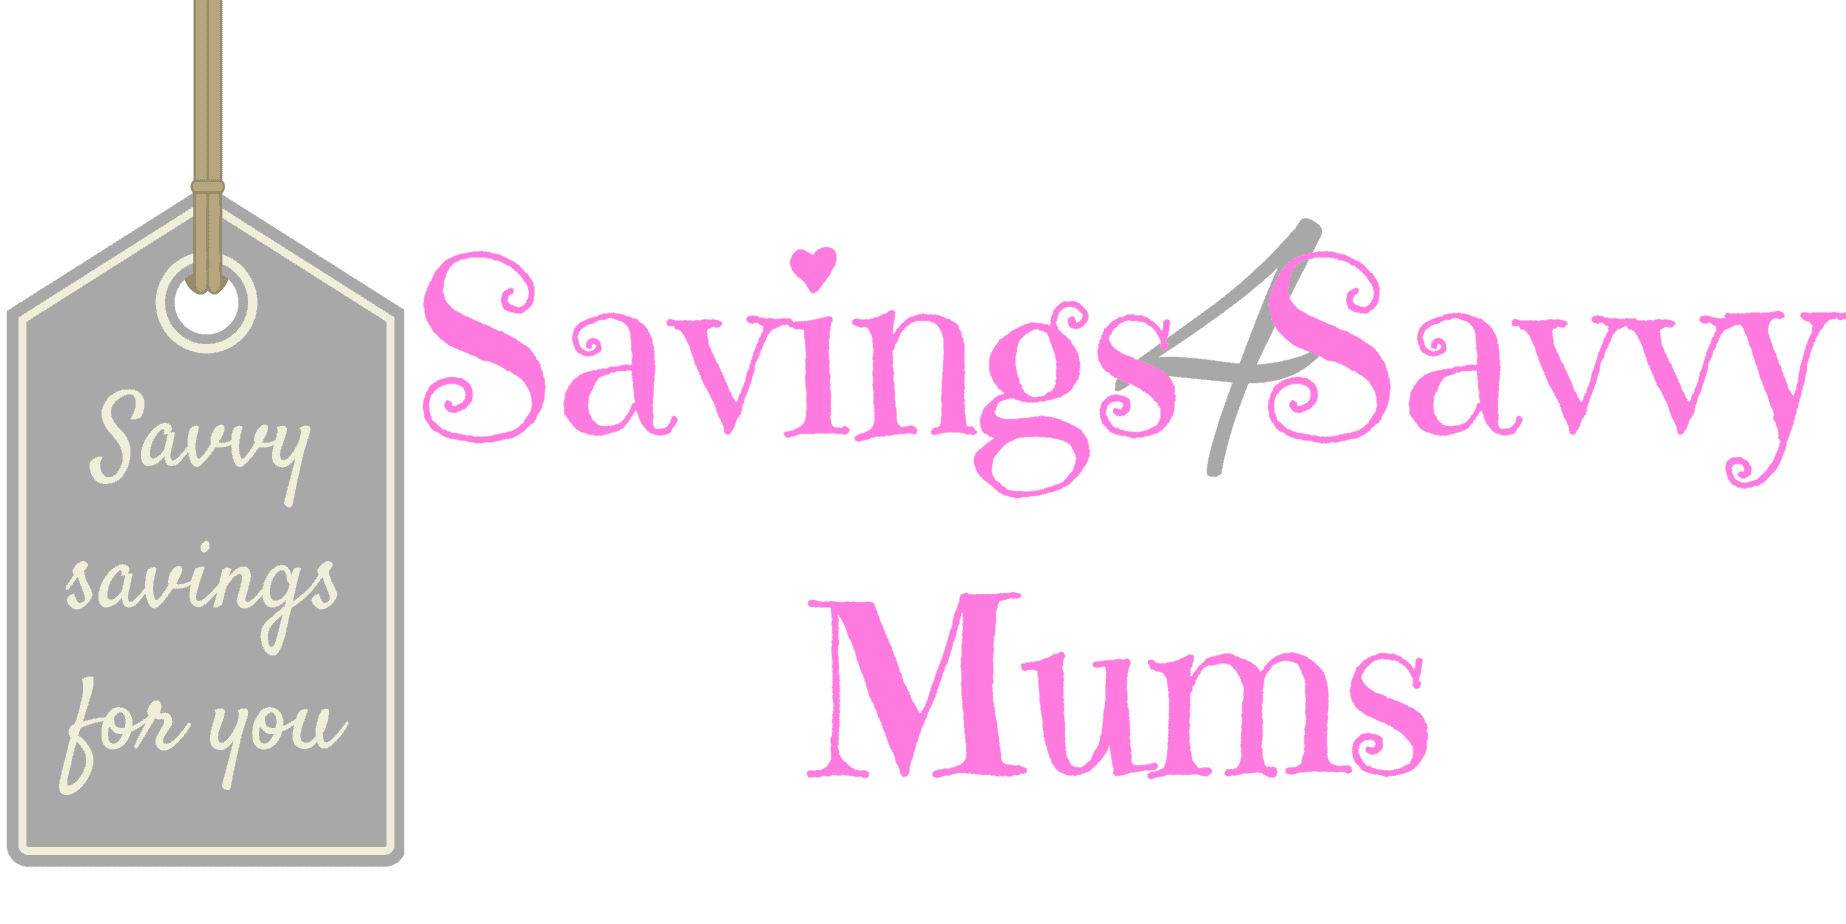 A Few Favourite Things - Savings 4 Savvy Mums